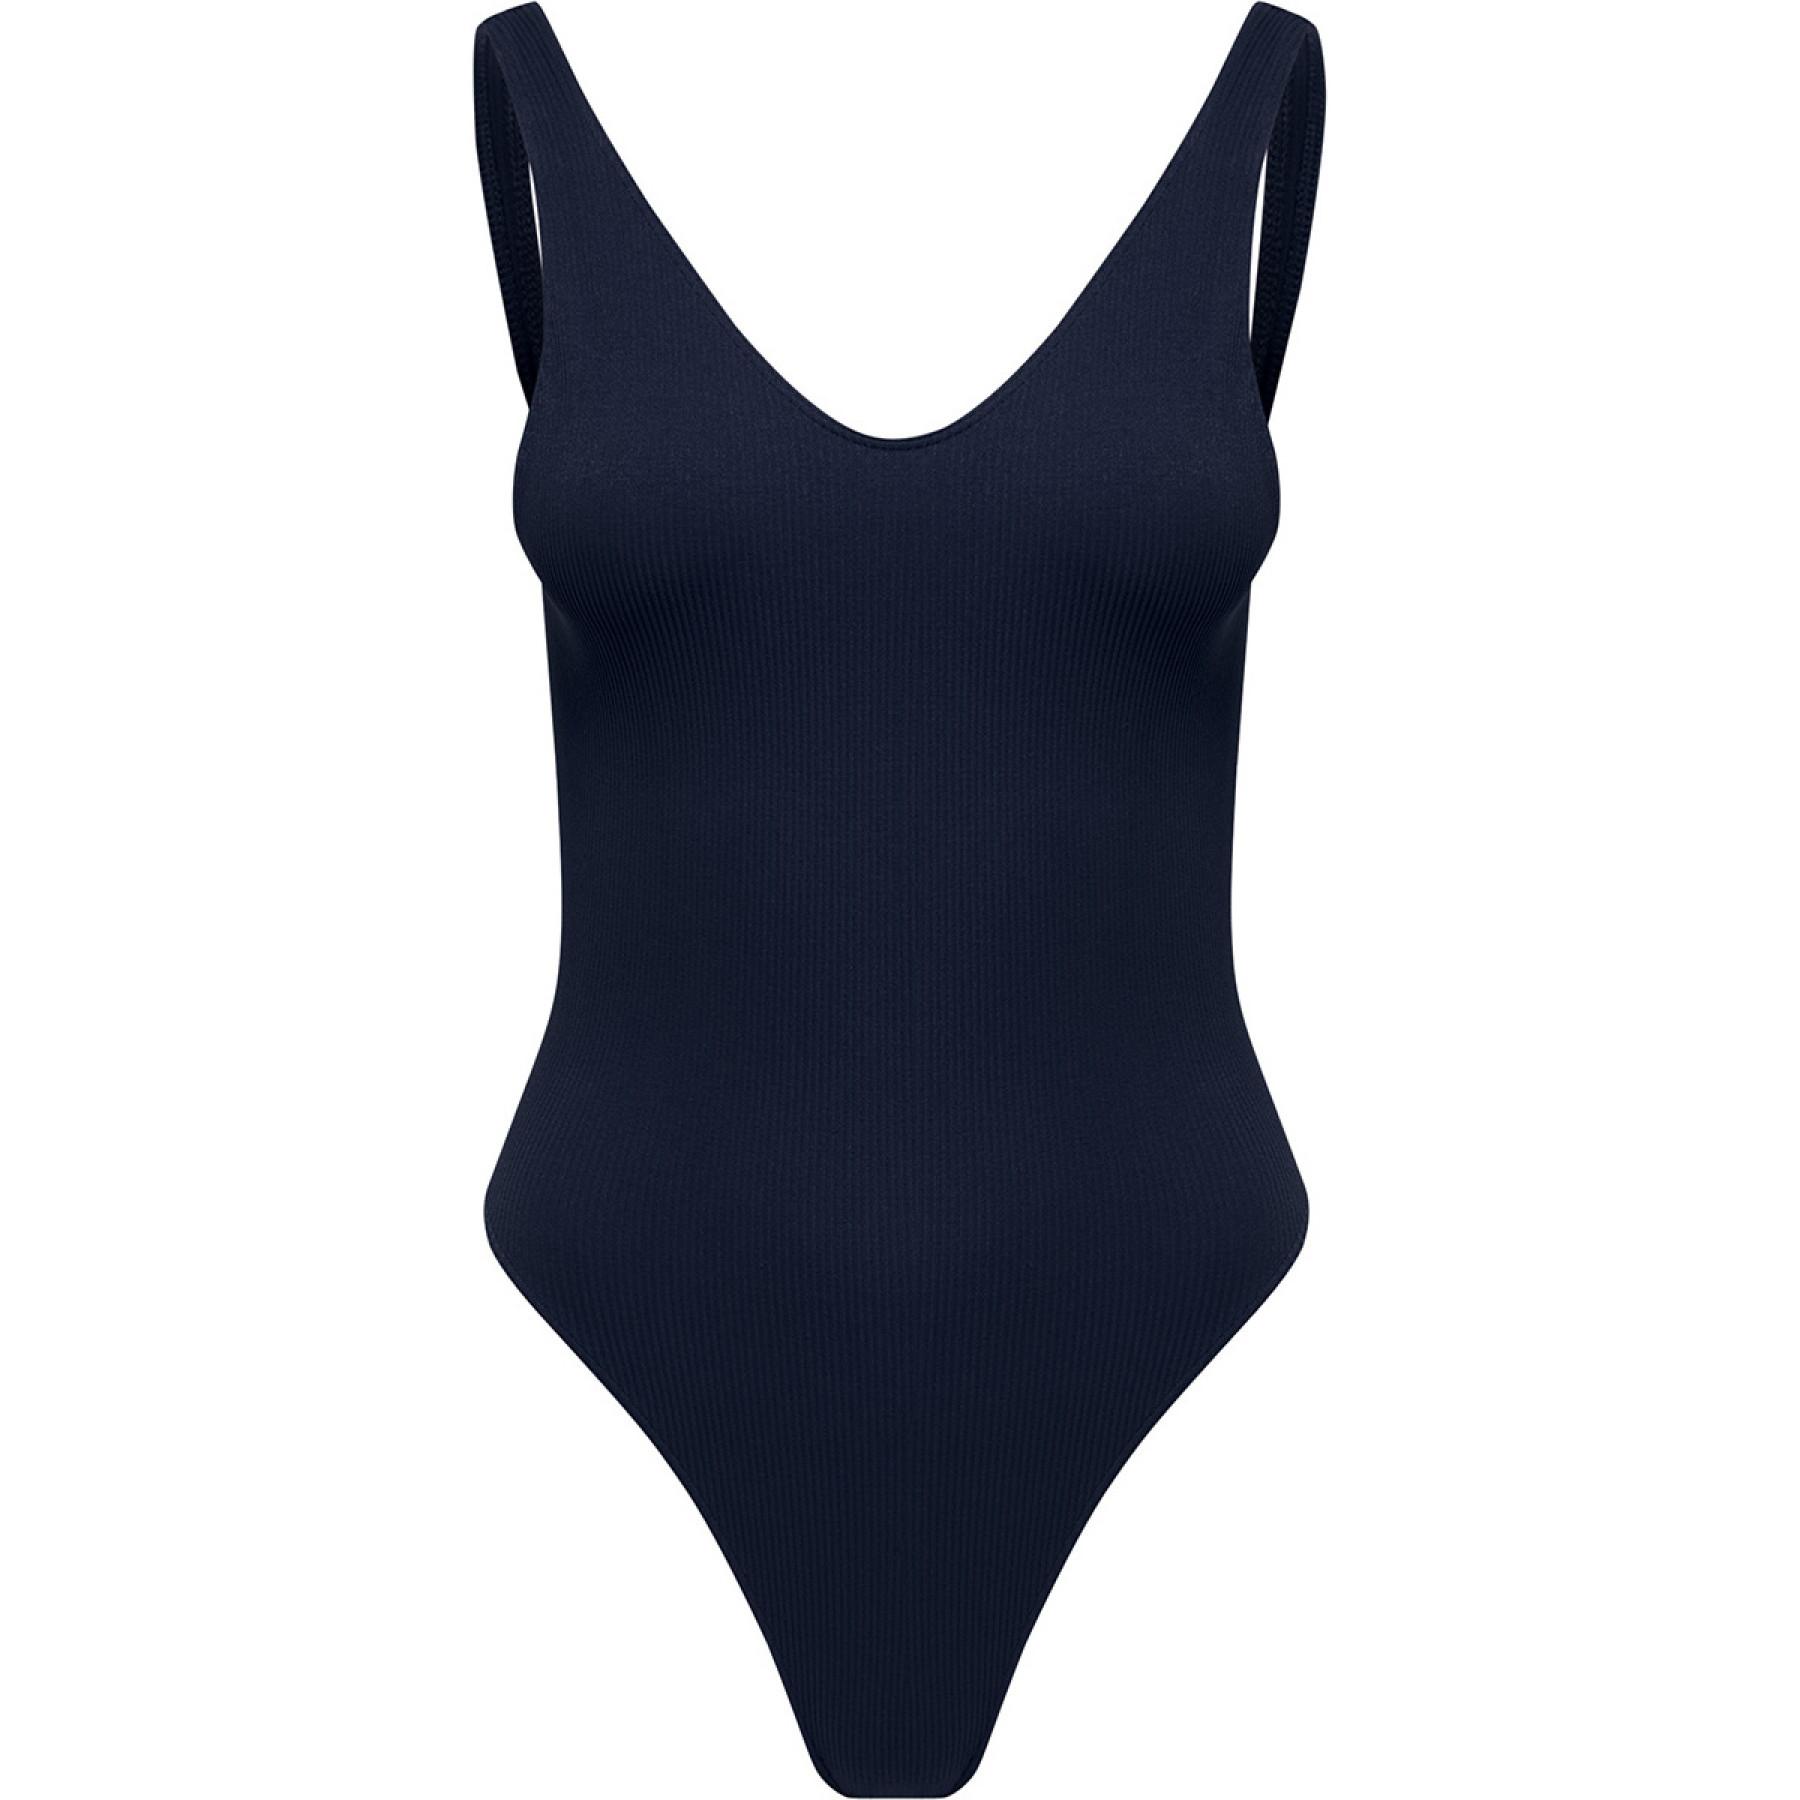 Women's bodysuit Hummel hmlblast seamless